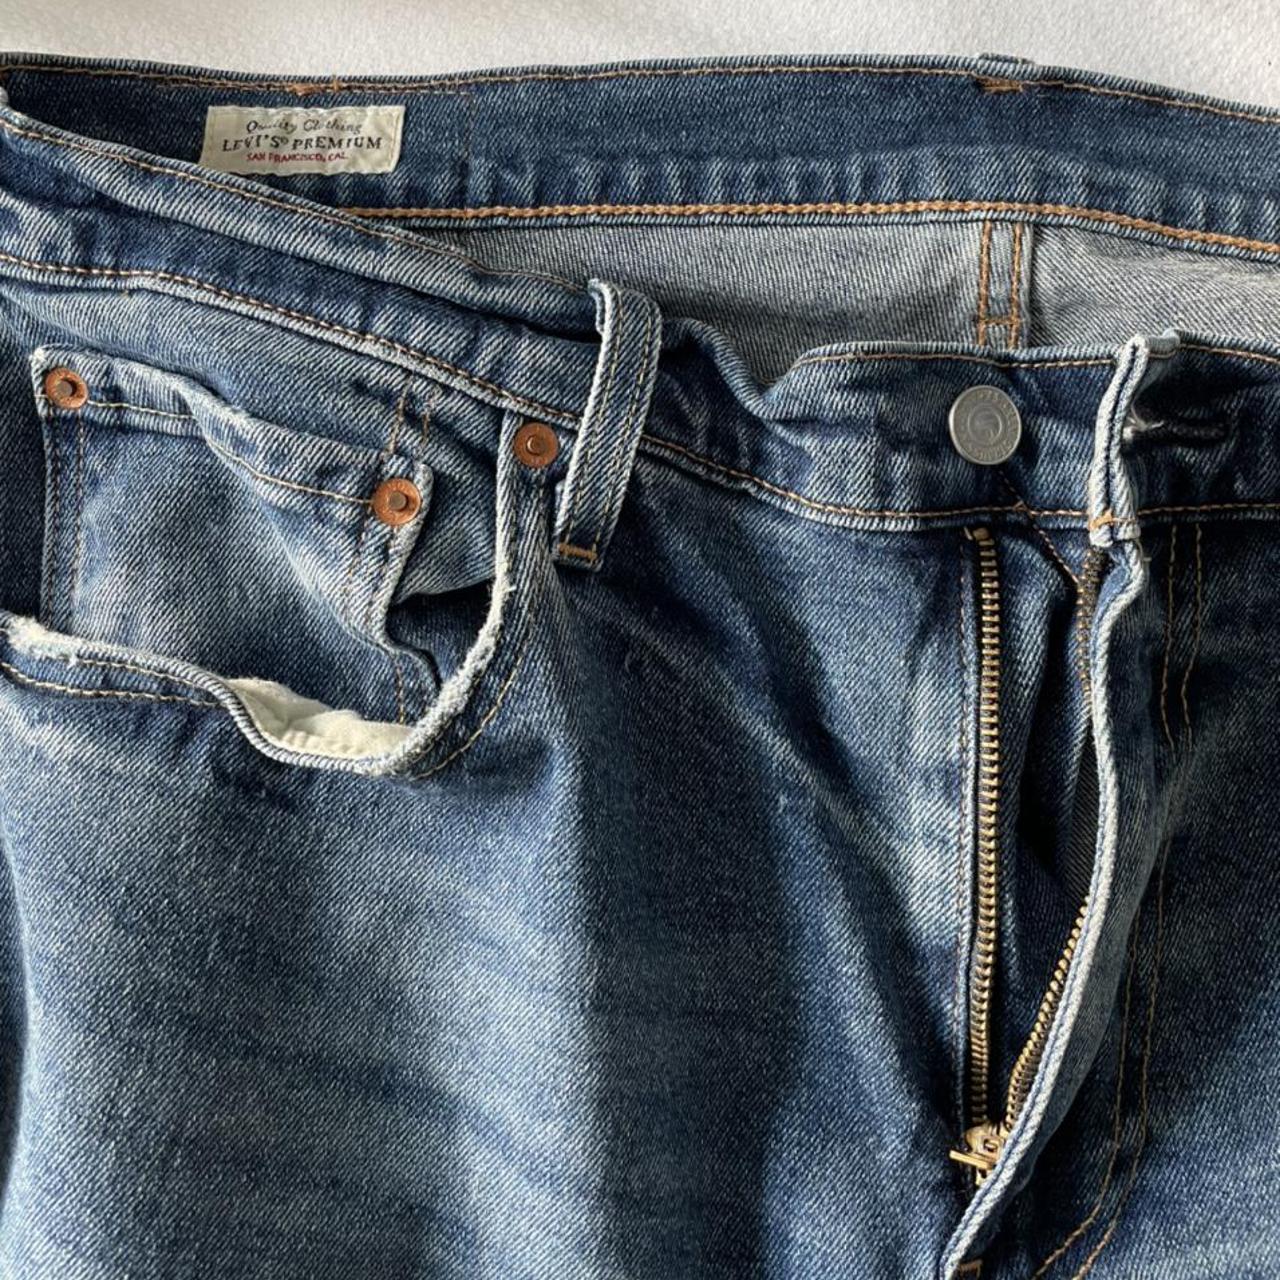 Levi 569 Jeans Blue Washed Size 3332 Waist Depop 